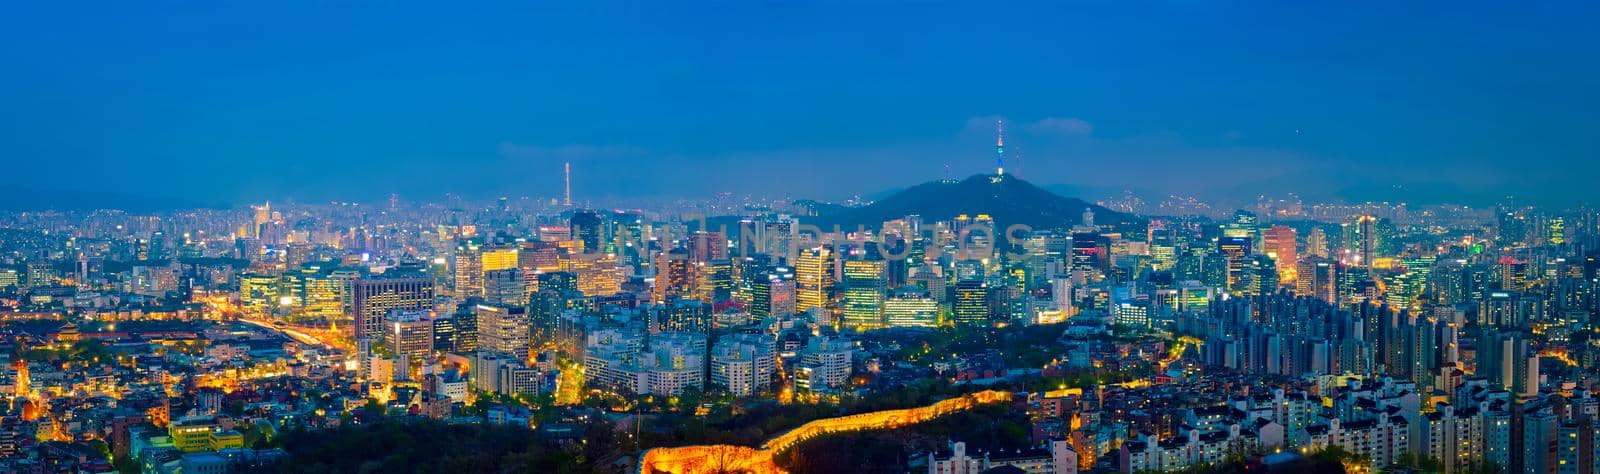 Seoul skyline in the night, South Korea. by dimol